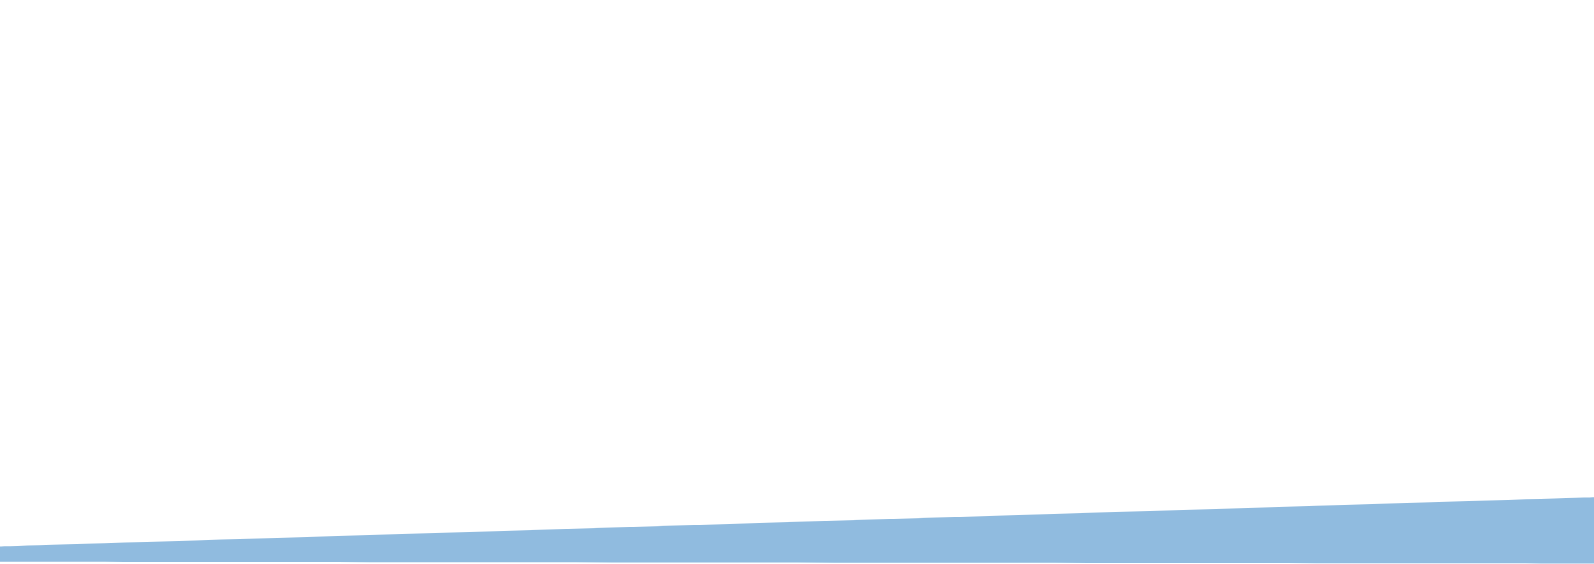 kneat.com Logo groß für dunkle Hintergründe (transparentes PNG)